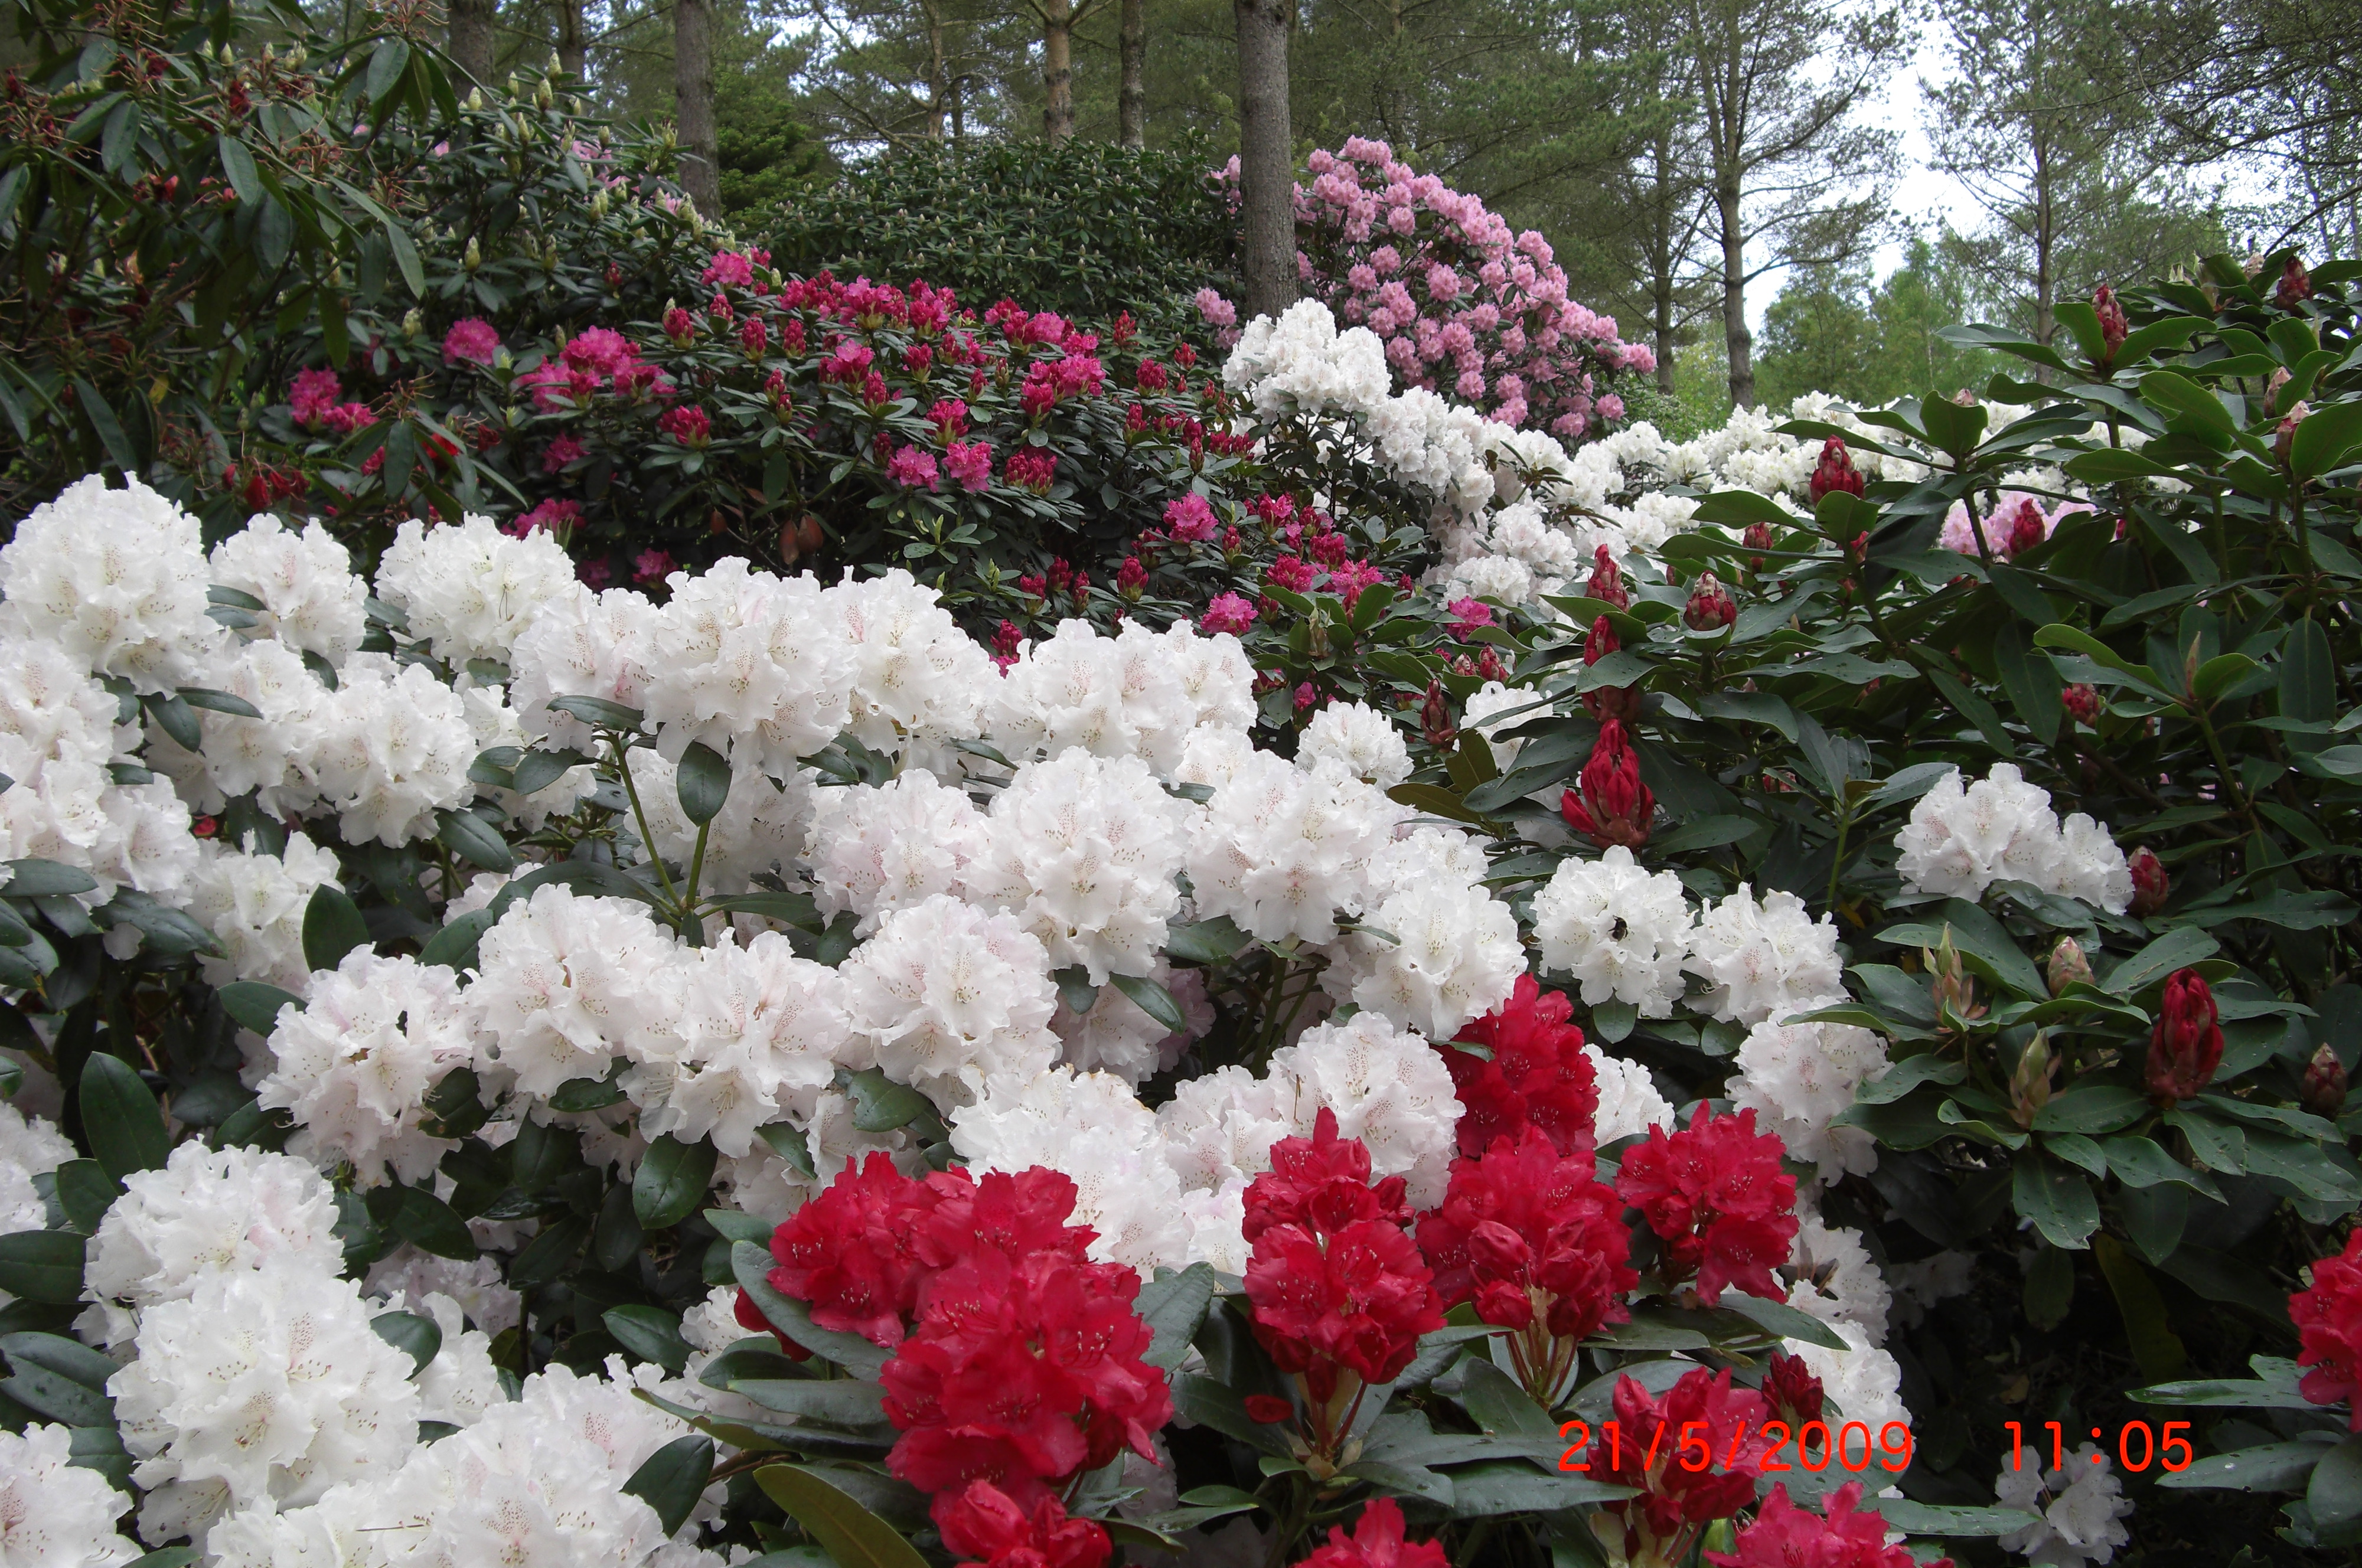 Parti av miljø fra Rhododendrondalen